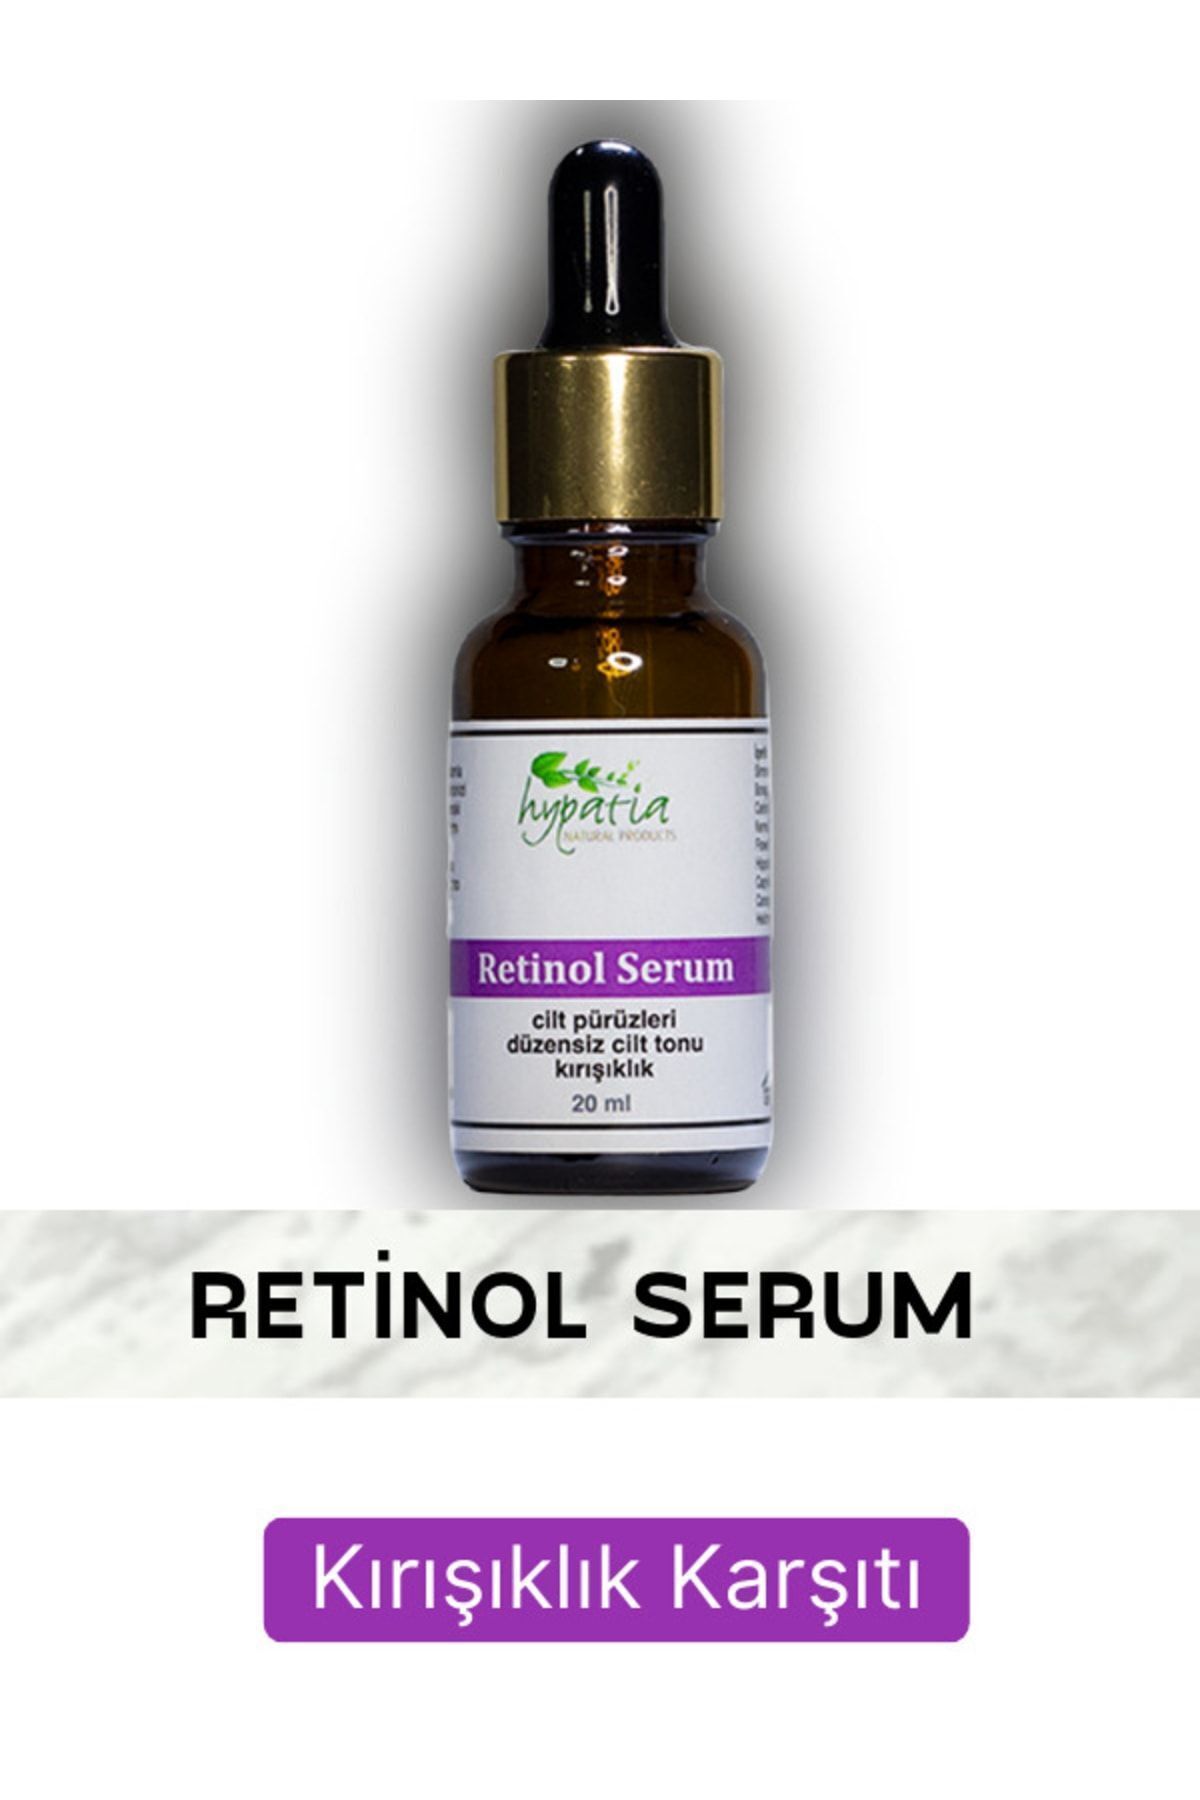 Hypatia Natural Products Retinol Serum